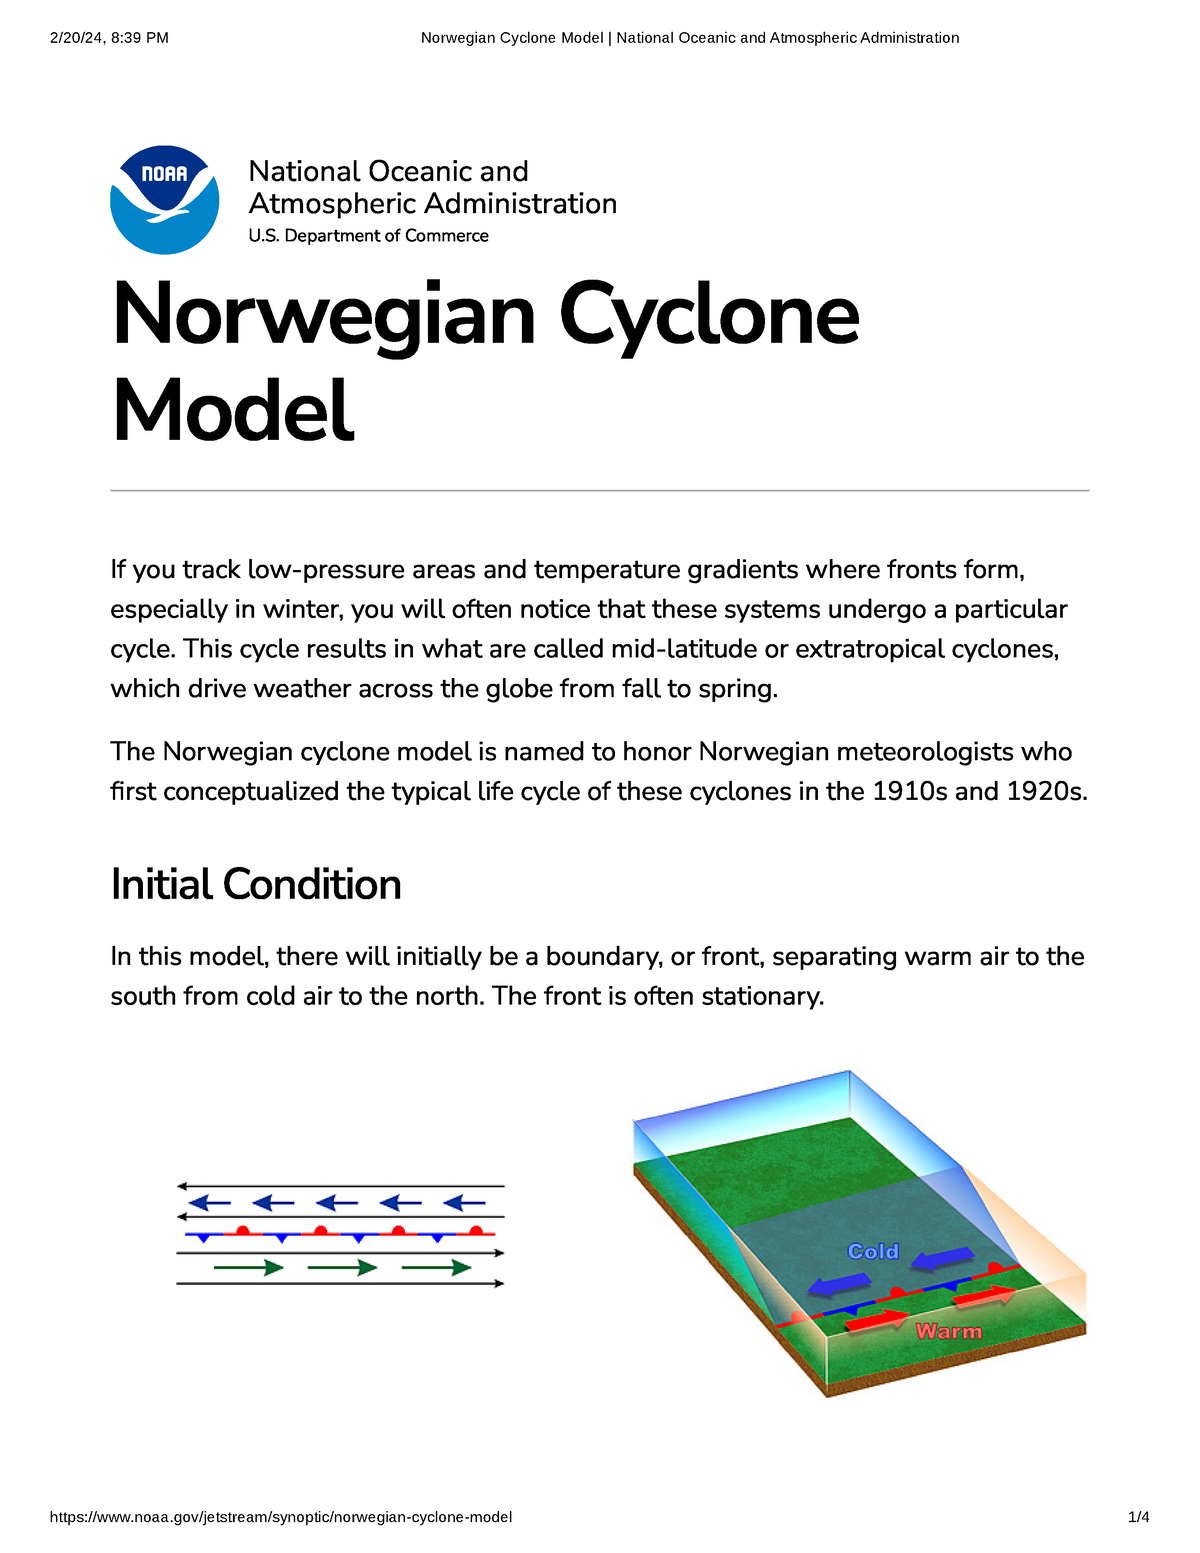 Norwegian Cyclone Model National Oceanic and Atmospheric